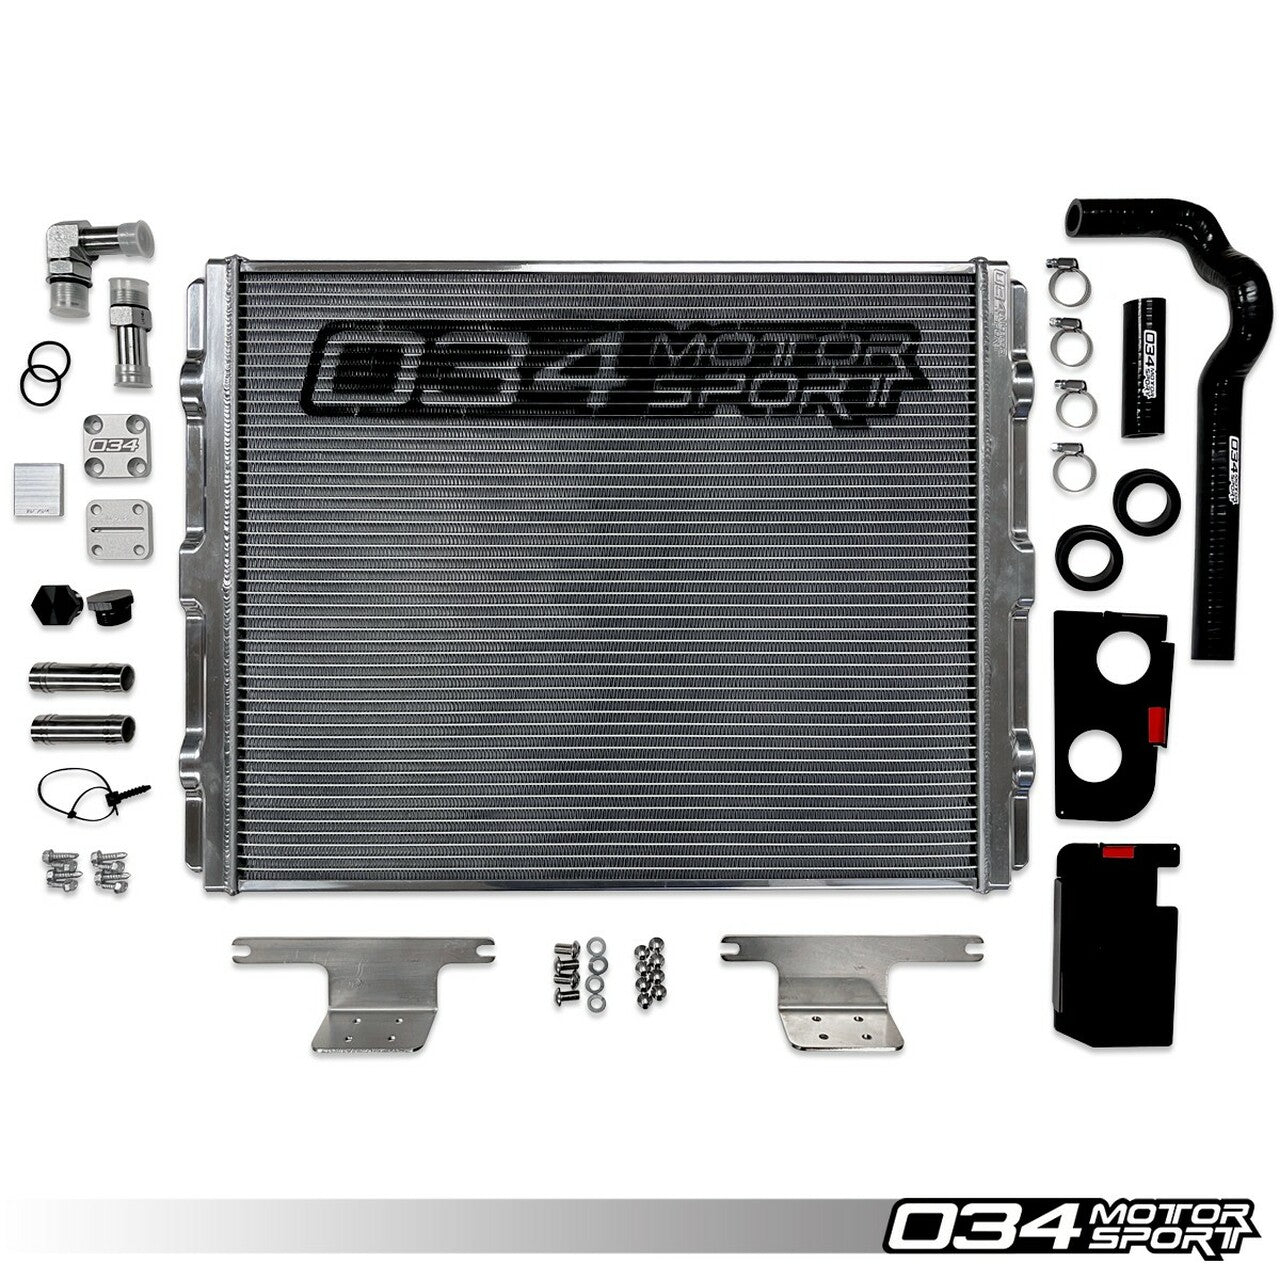 034motorsport Turbocharger Heat Exchanger Upgrade Kit For Audi C7 S6 - Wayside Performance